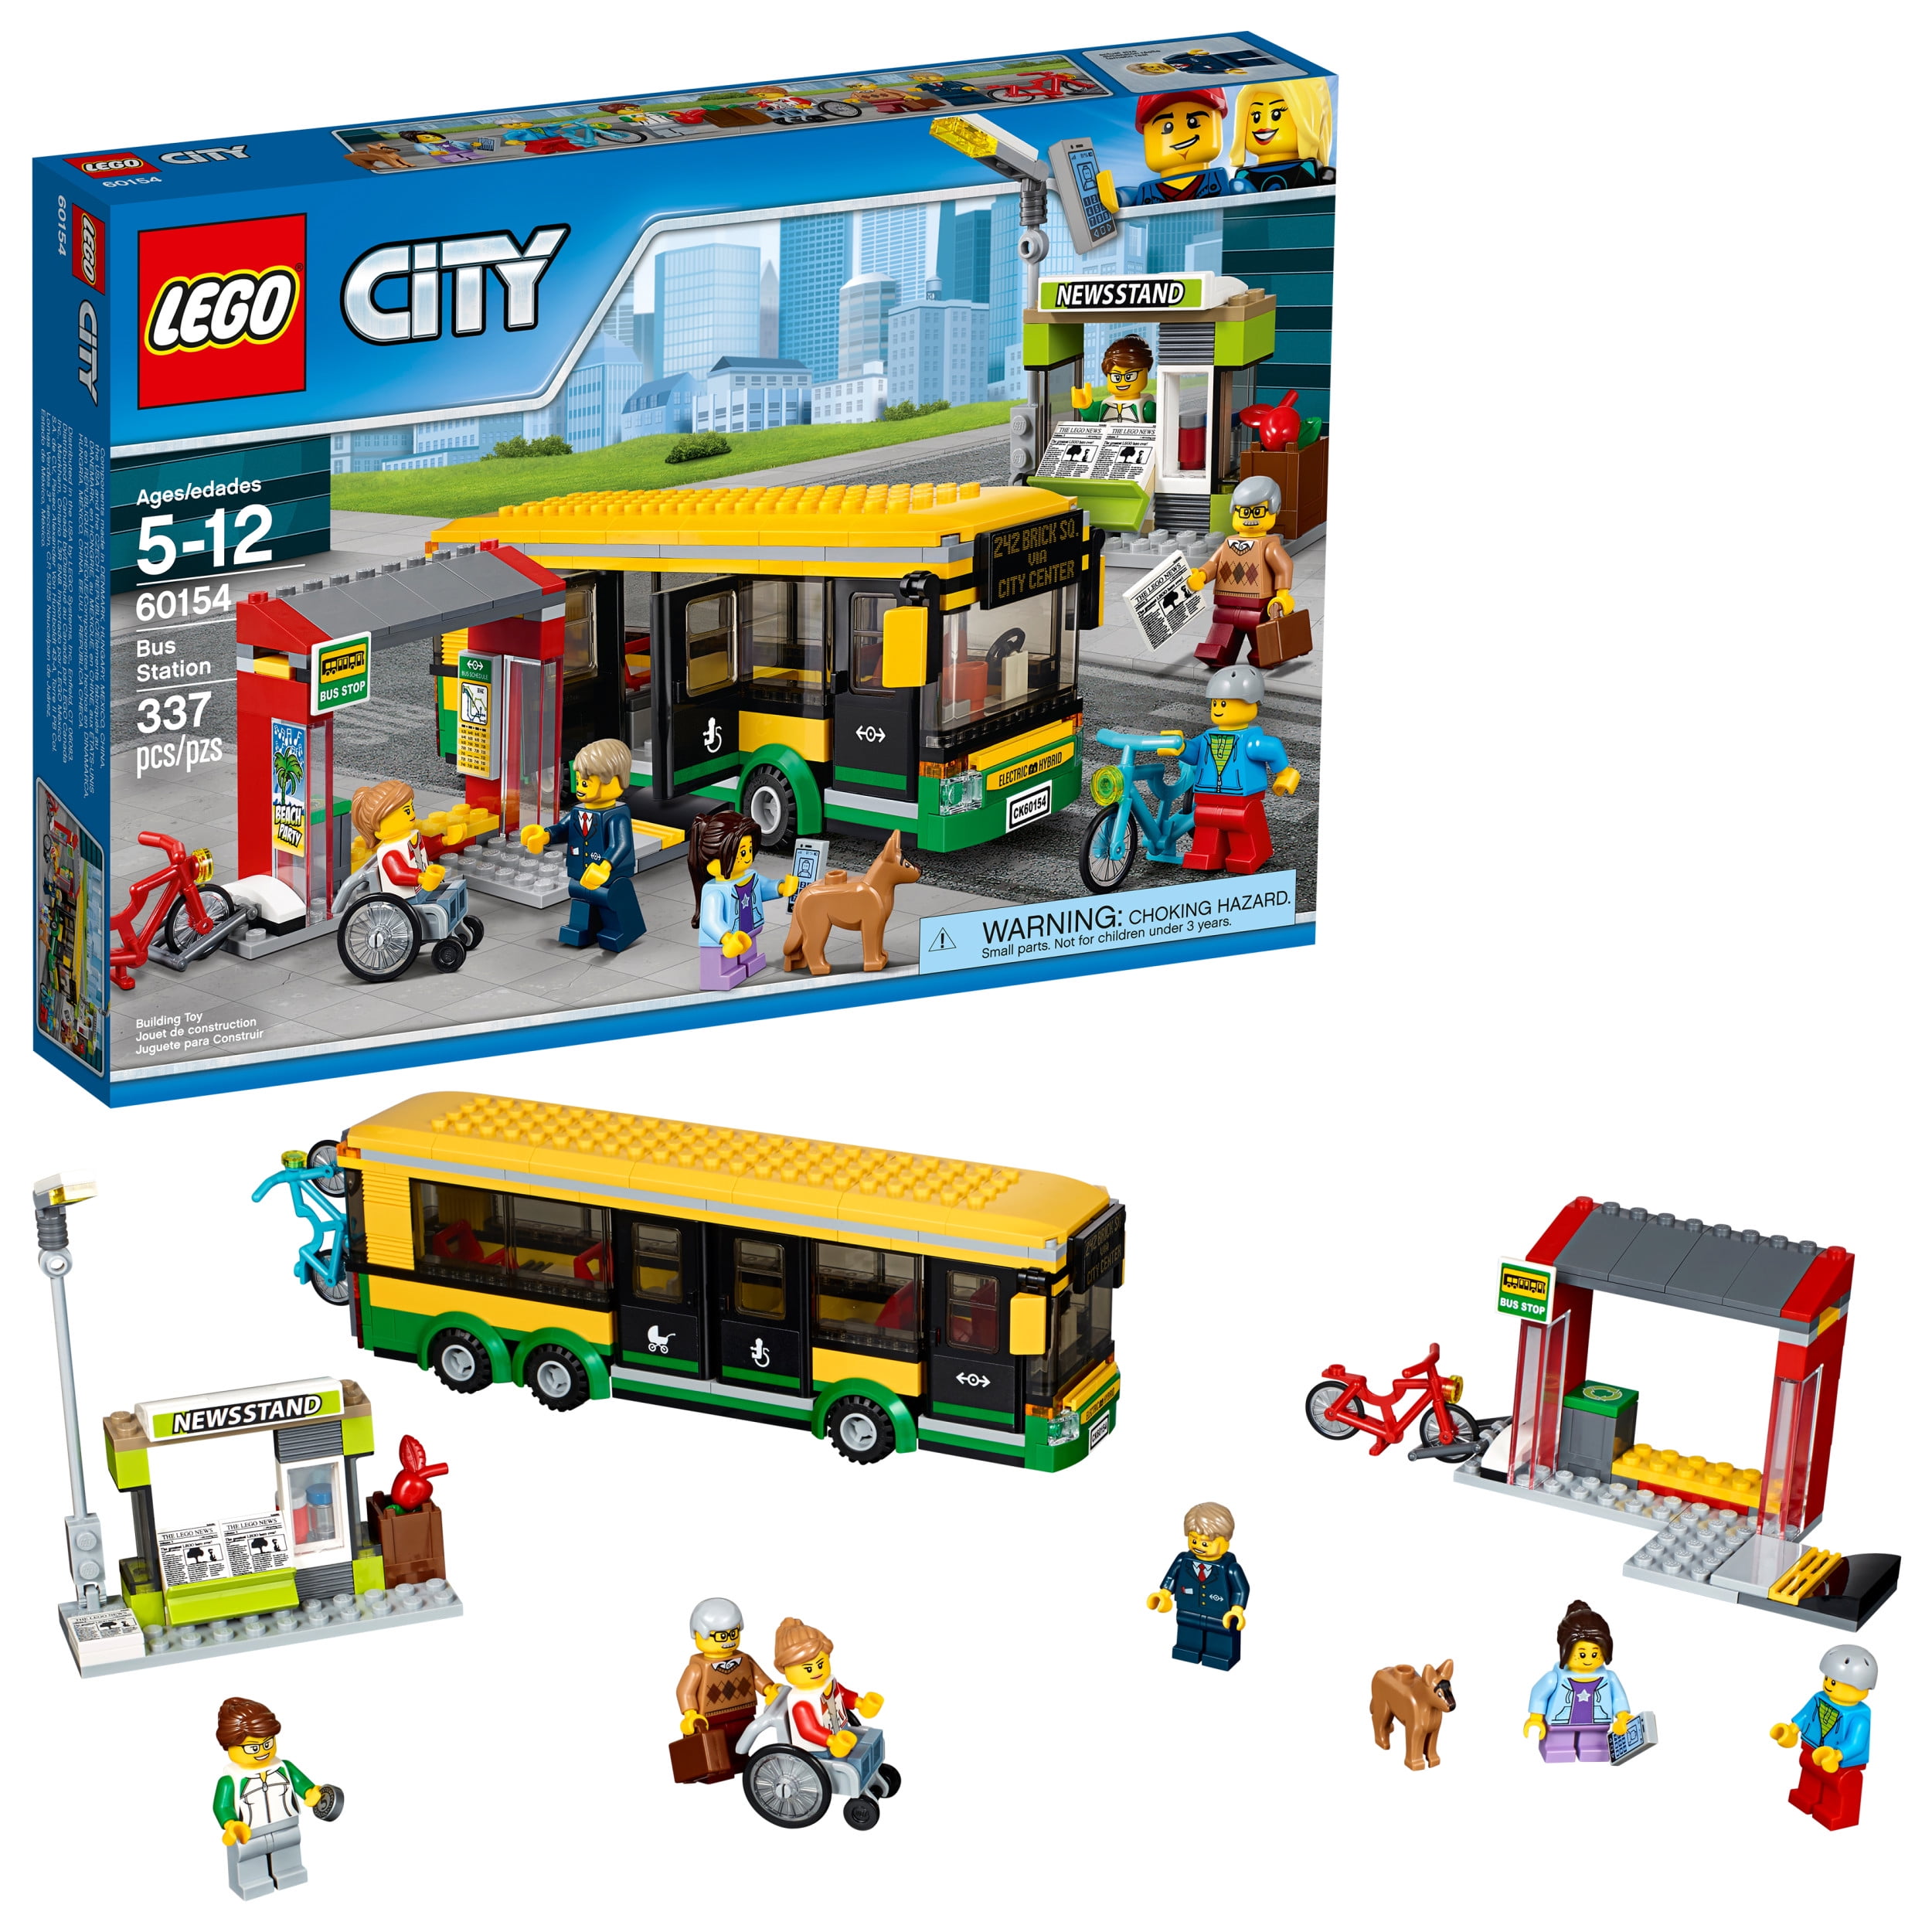 Kilimanjaro mytologi Åre LEGO City Town Bus Station 60154 Building Set (337 Pieces) - Walmart.com